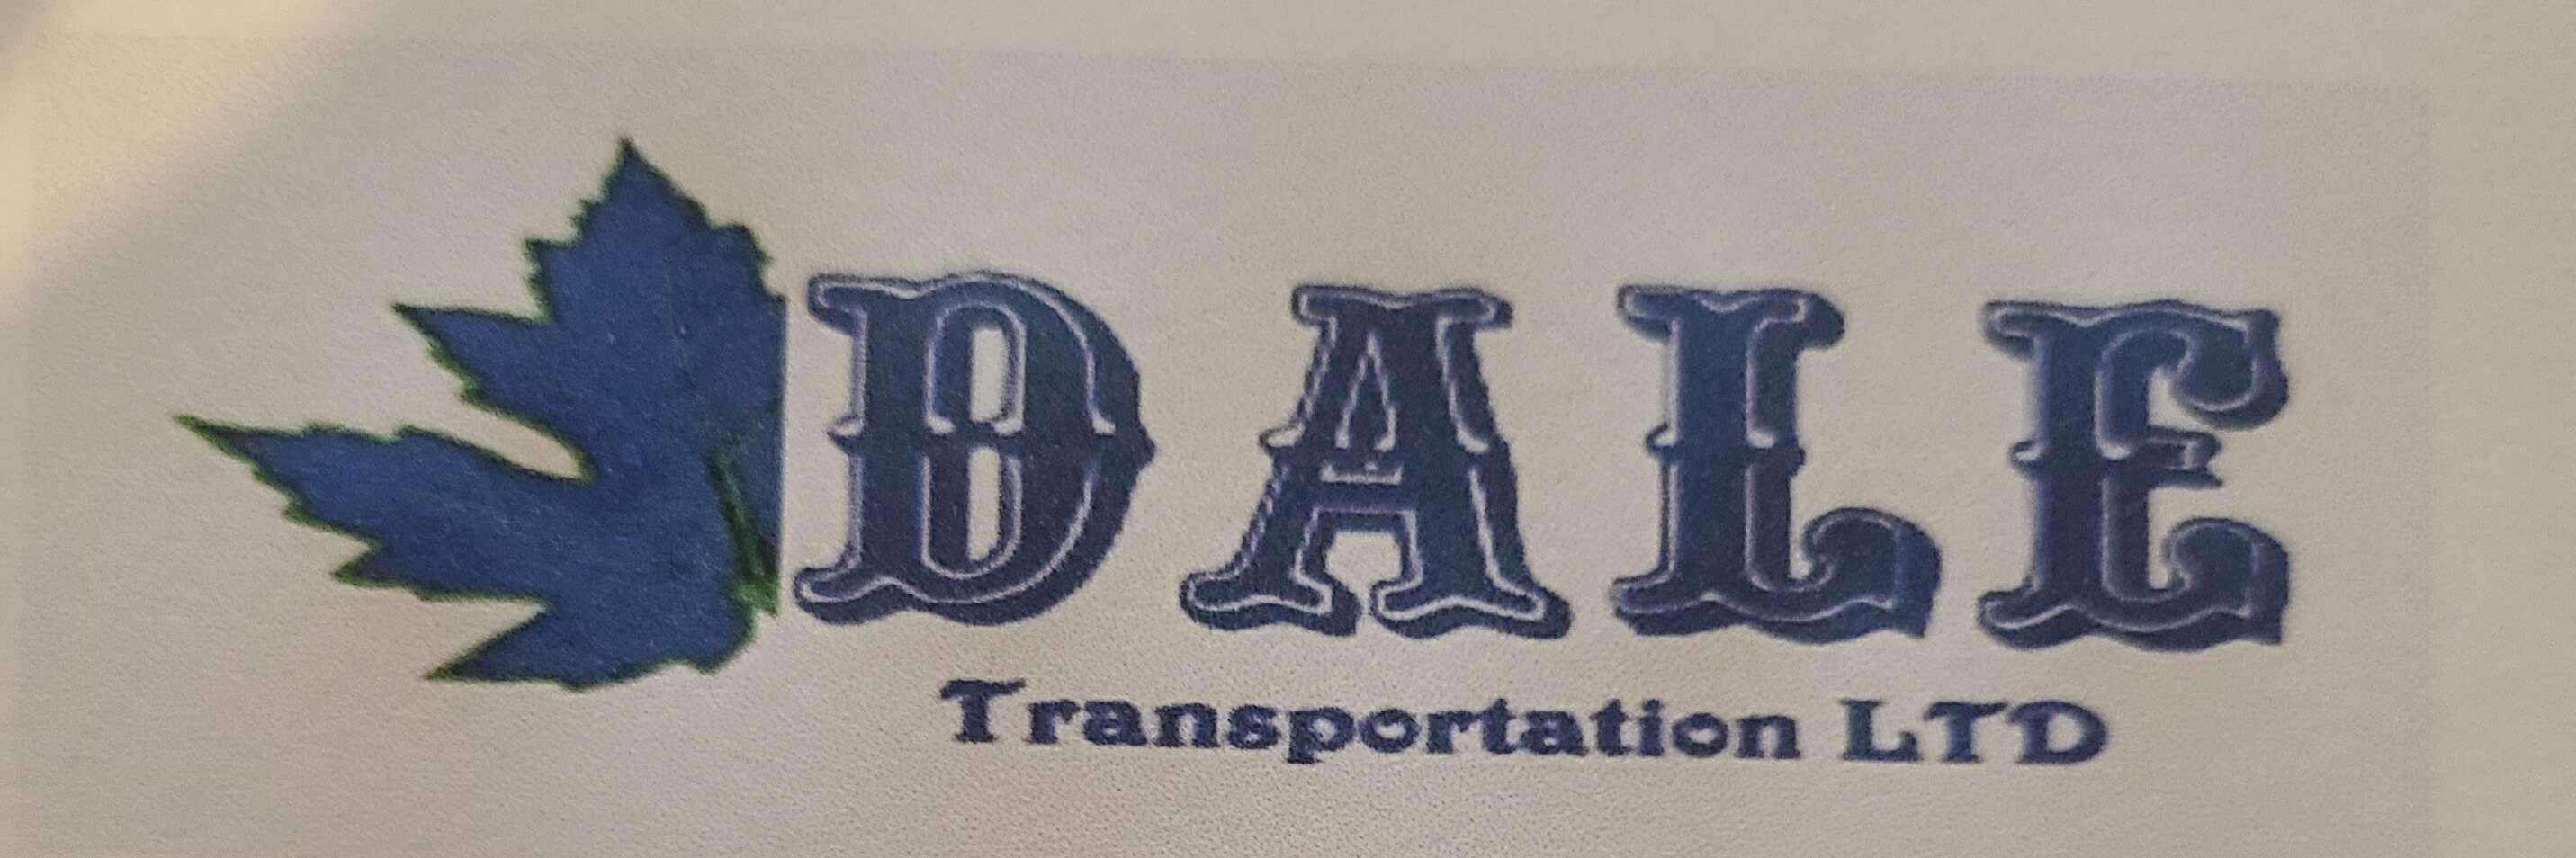 Dale Transportation